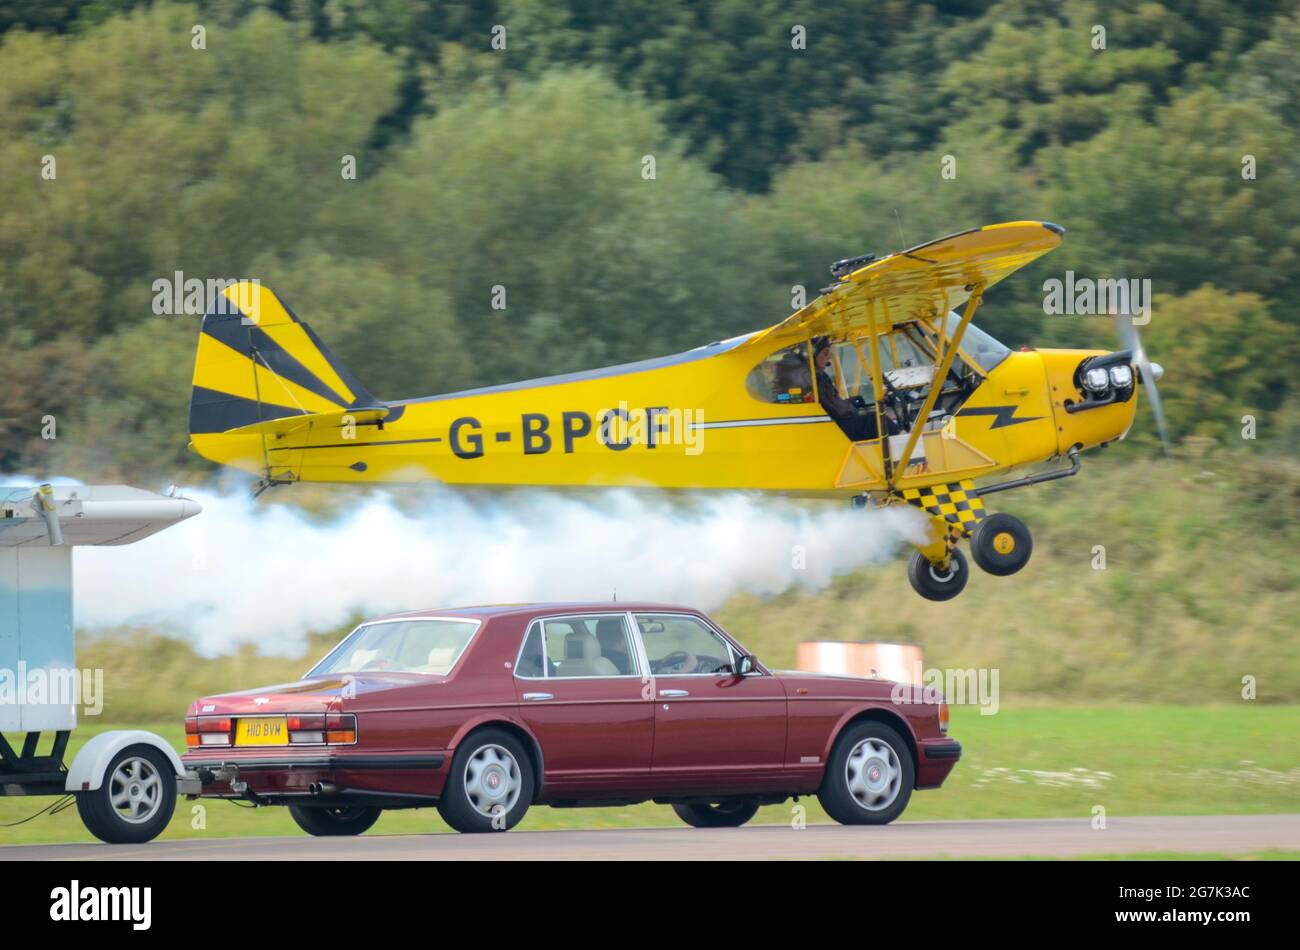 O'Brien's Flying Circus Kunstflug Stunt Team Trailer Top Landing Stunt bei Shoreham Airshow. Vintage Piper J-3C-65 Cub Plane. Anhänger mit dem Auto abgeschleppt Stockfoto